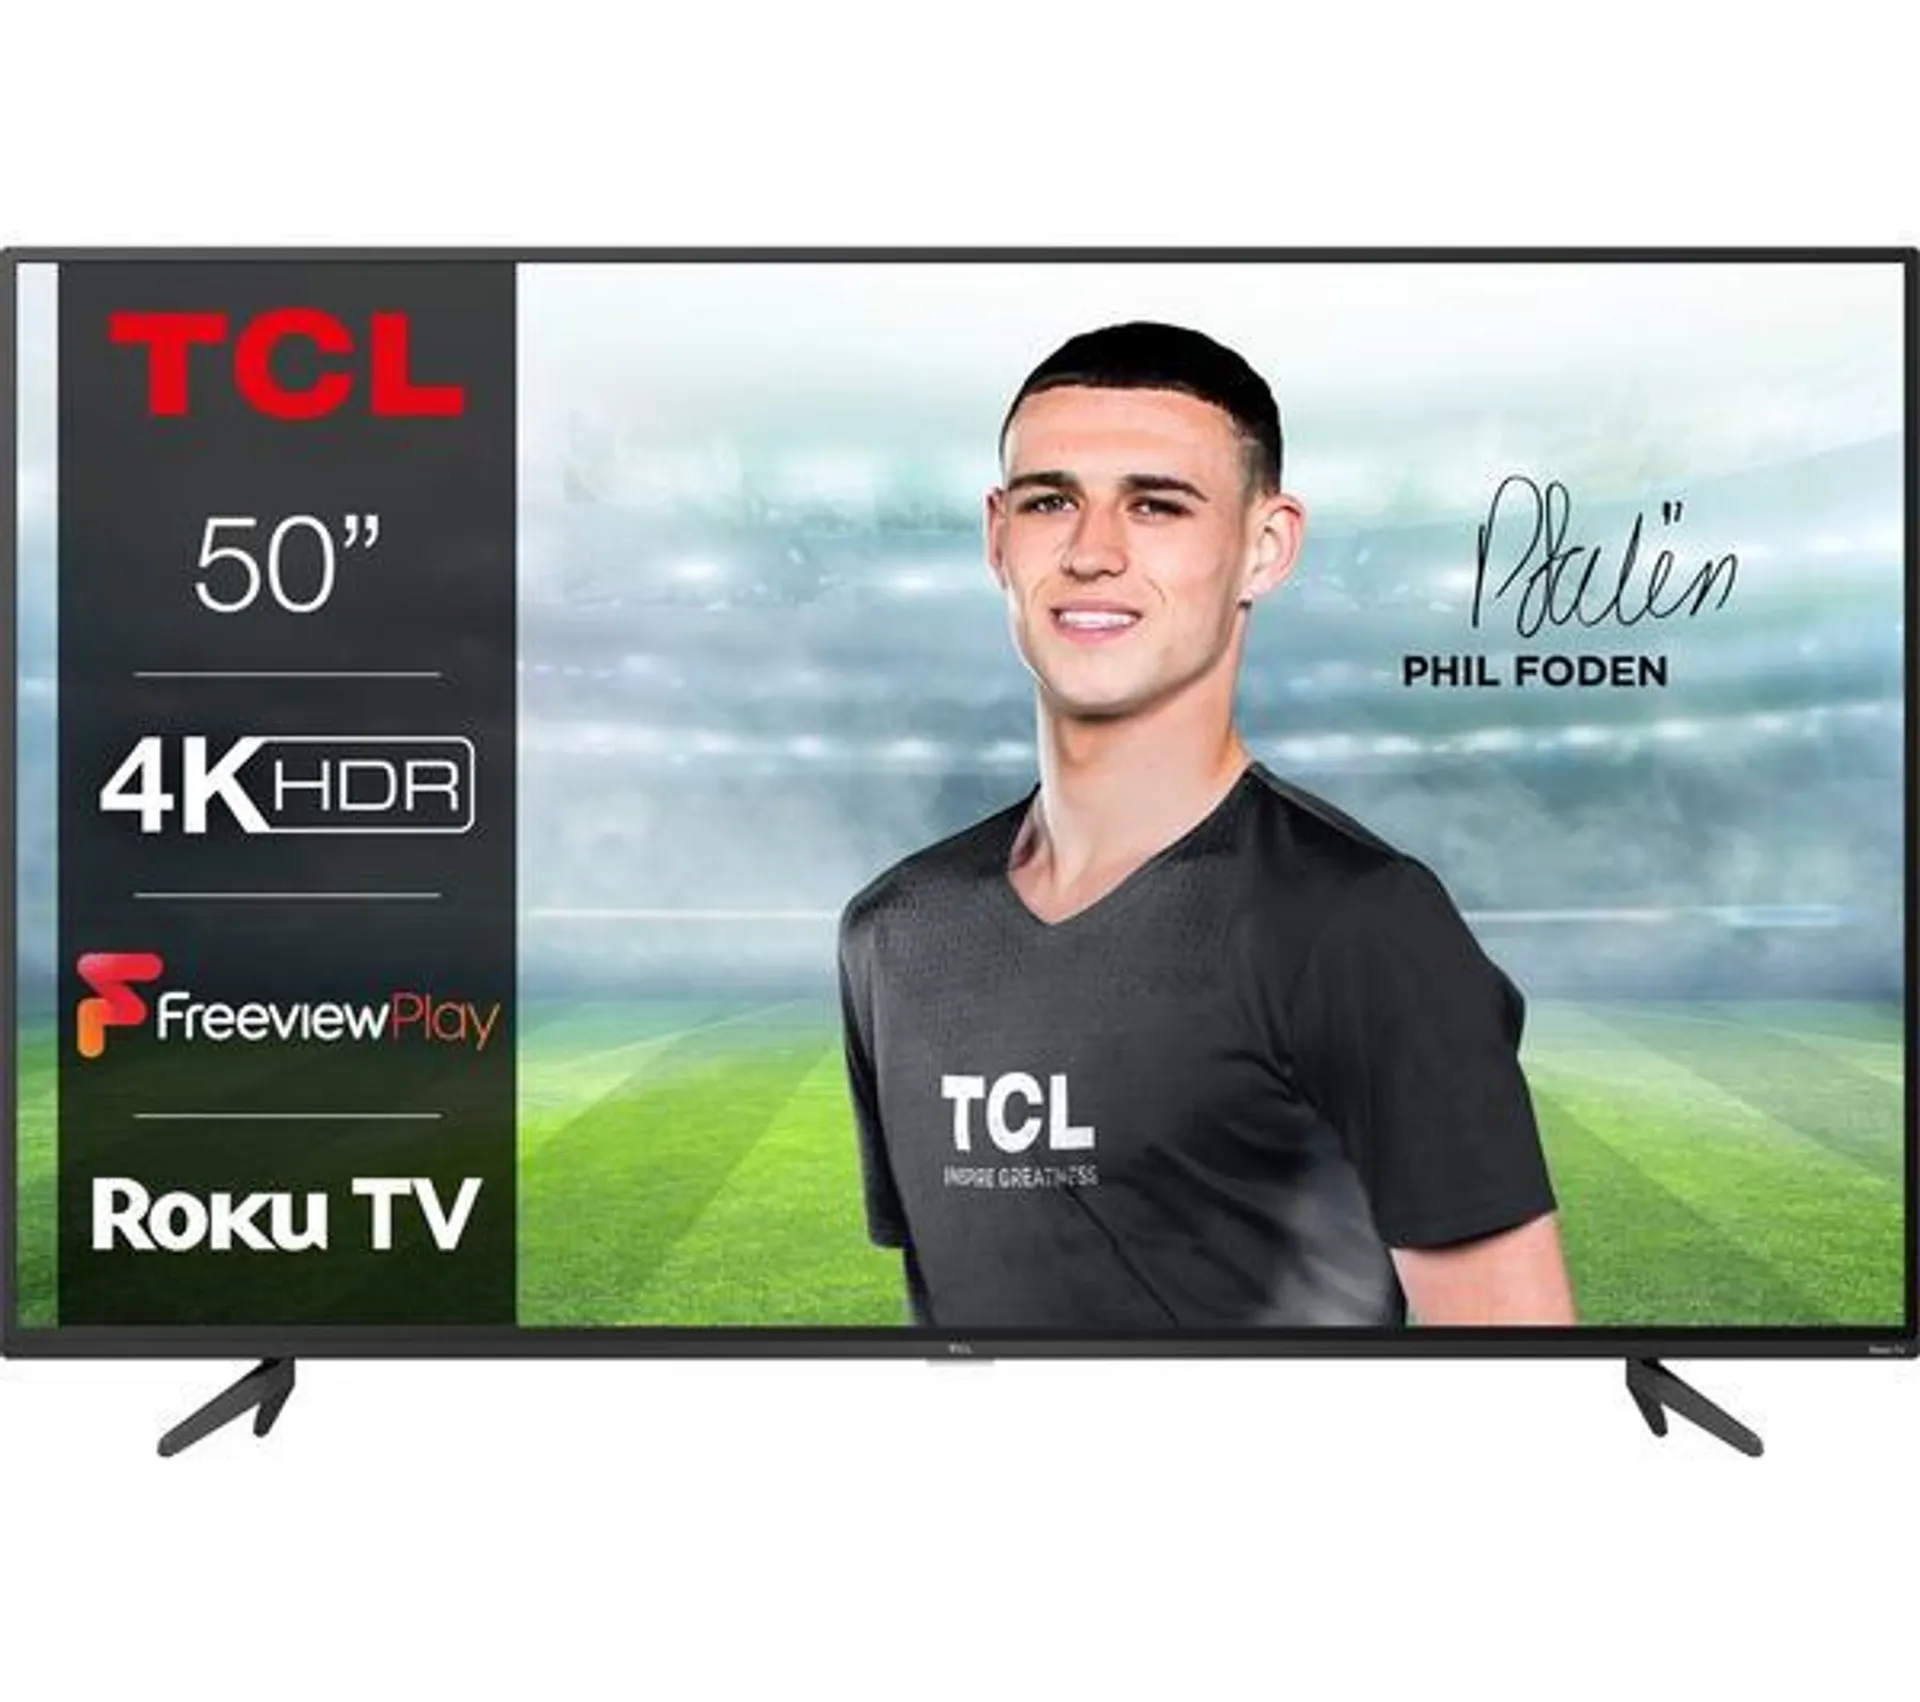 TCL 55RP620K Roku 55" Smart 4K Ultra HD HDR LED TV